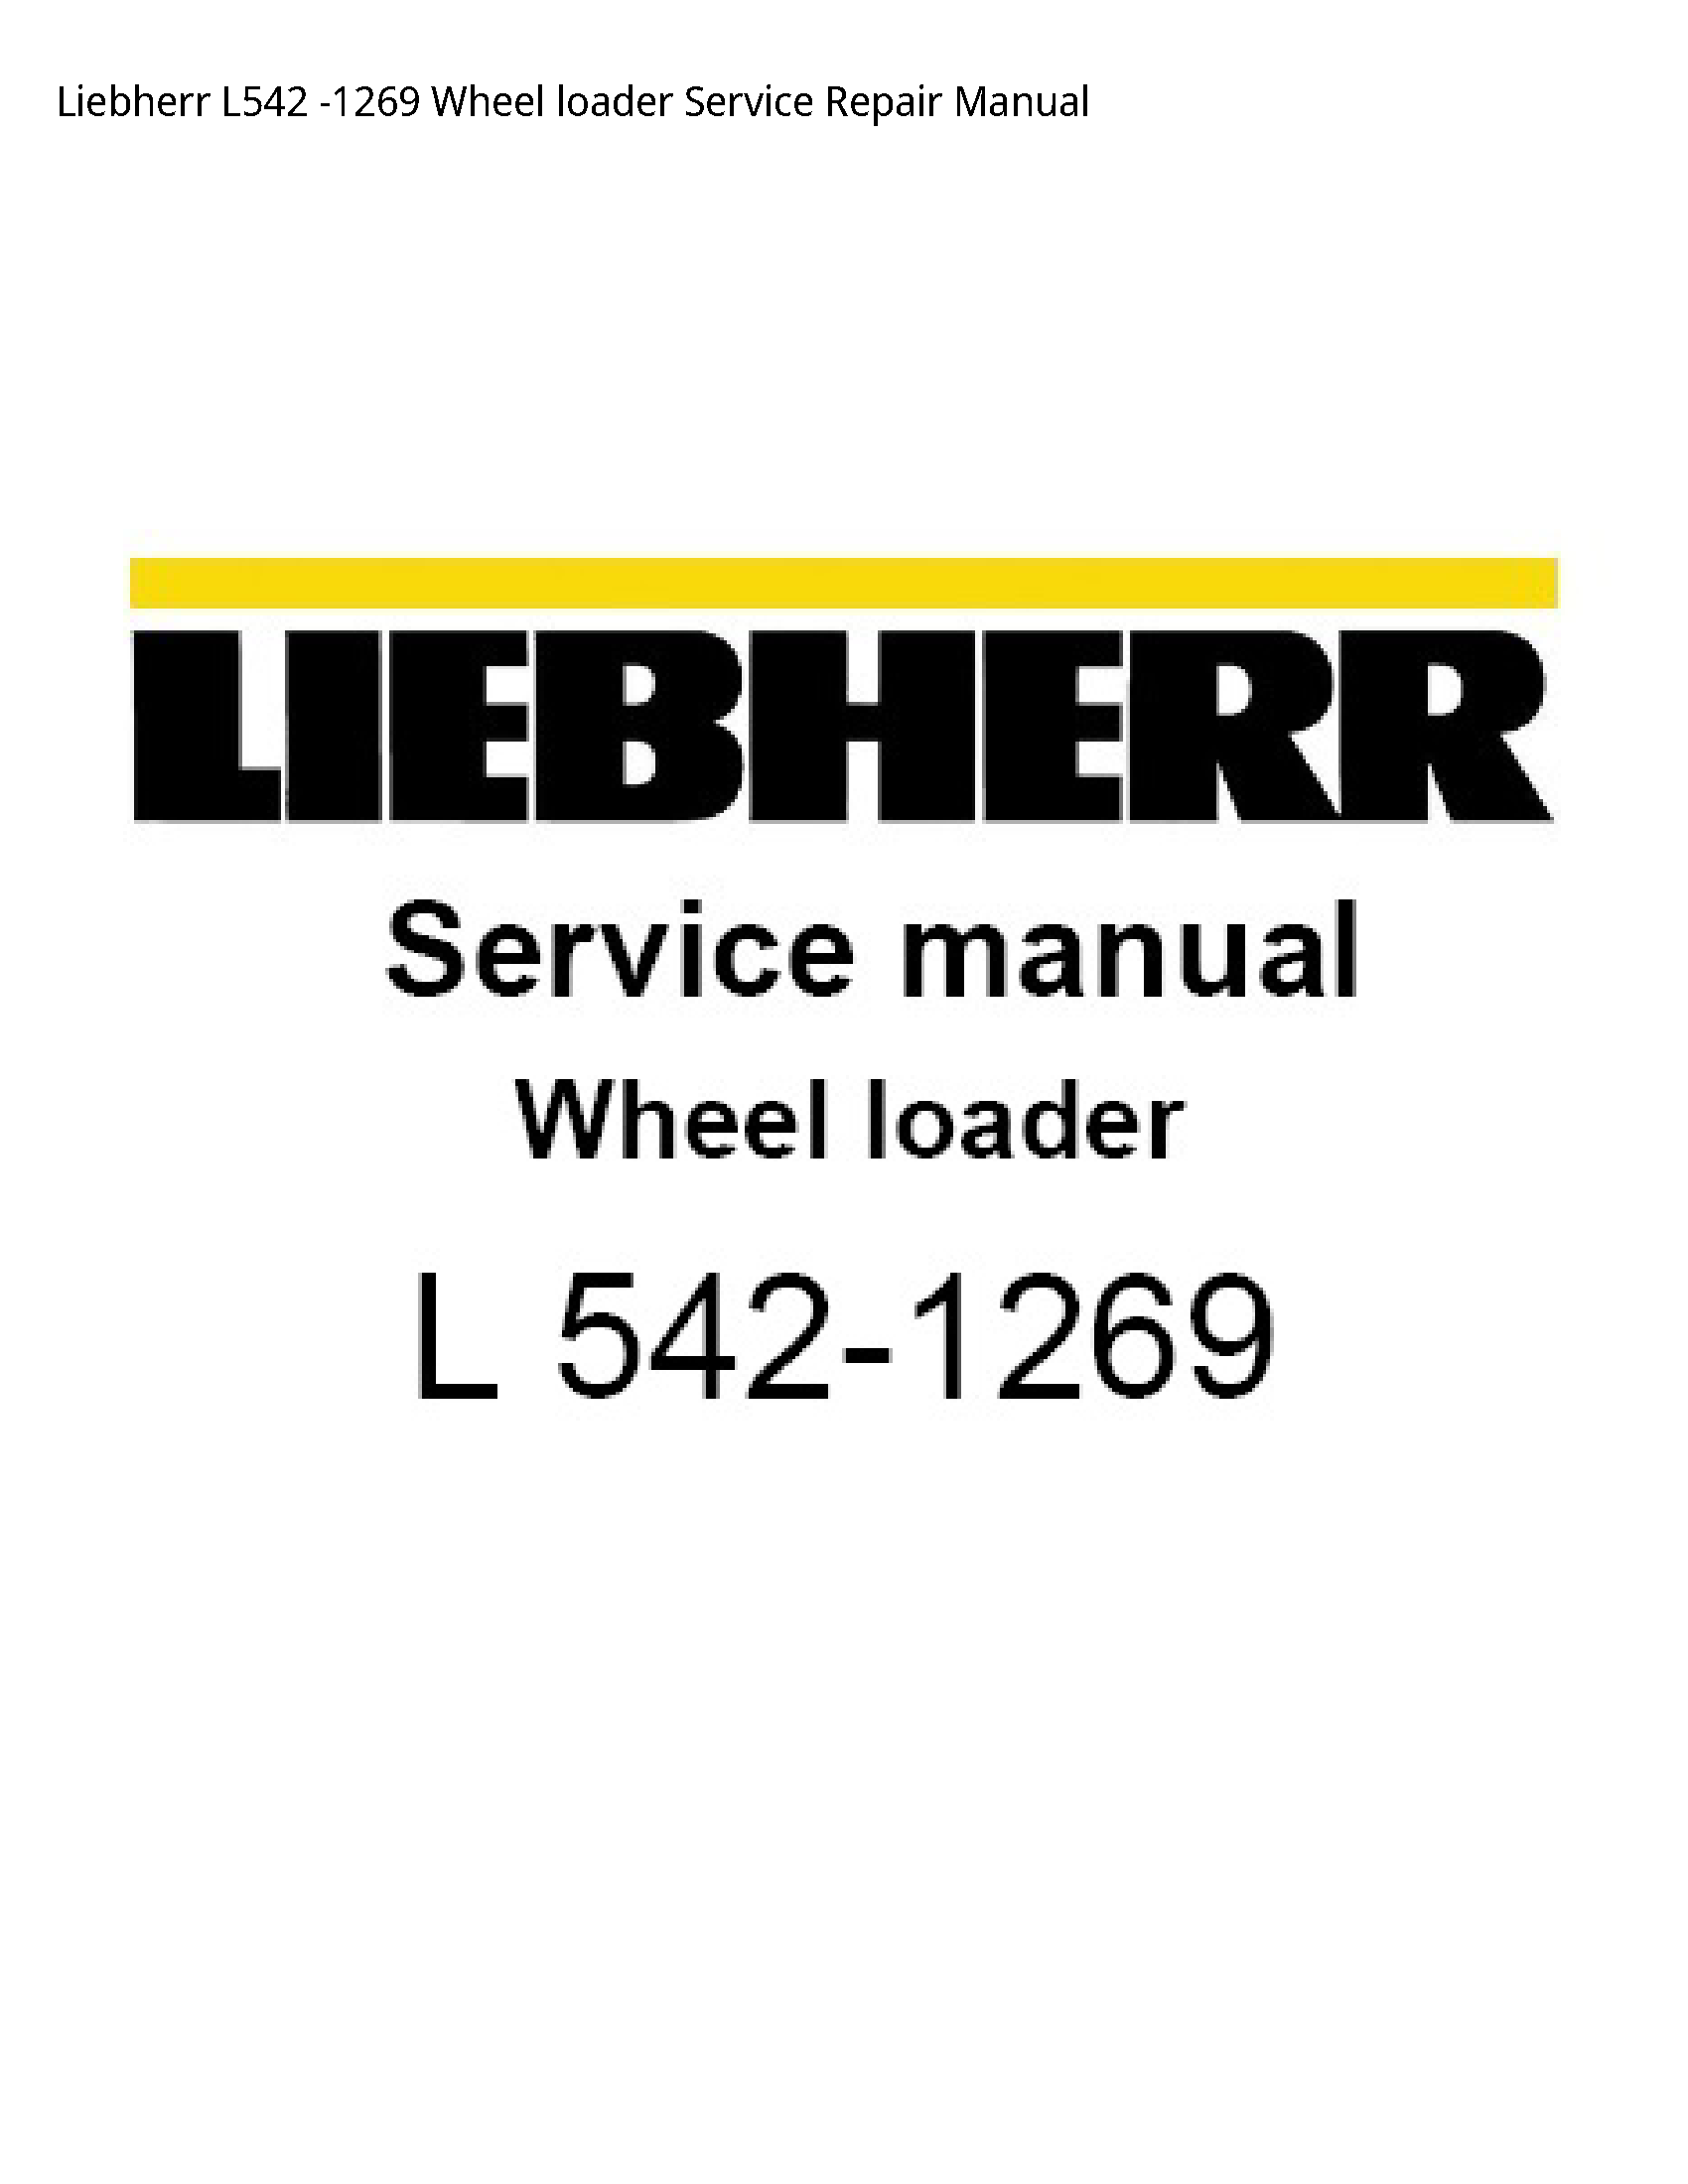 Liebherr L542 Wheel loader manual